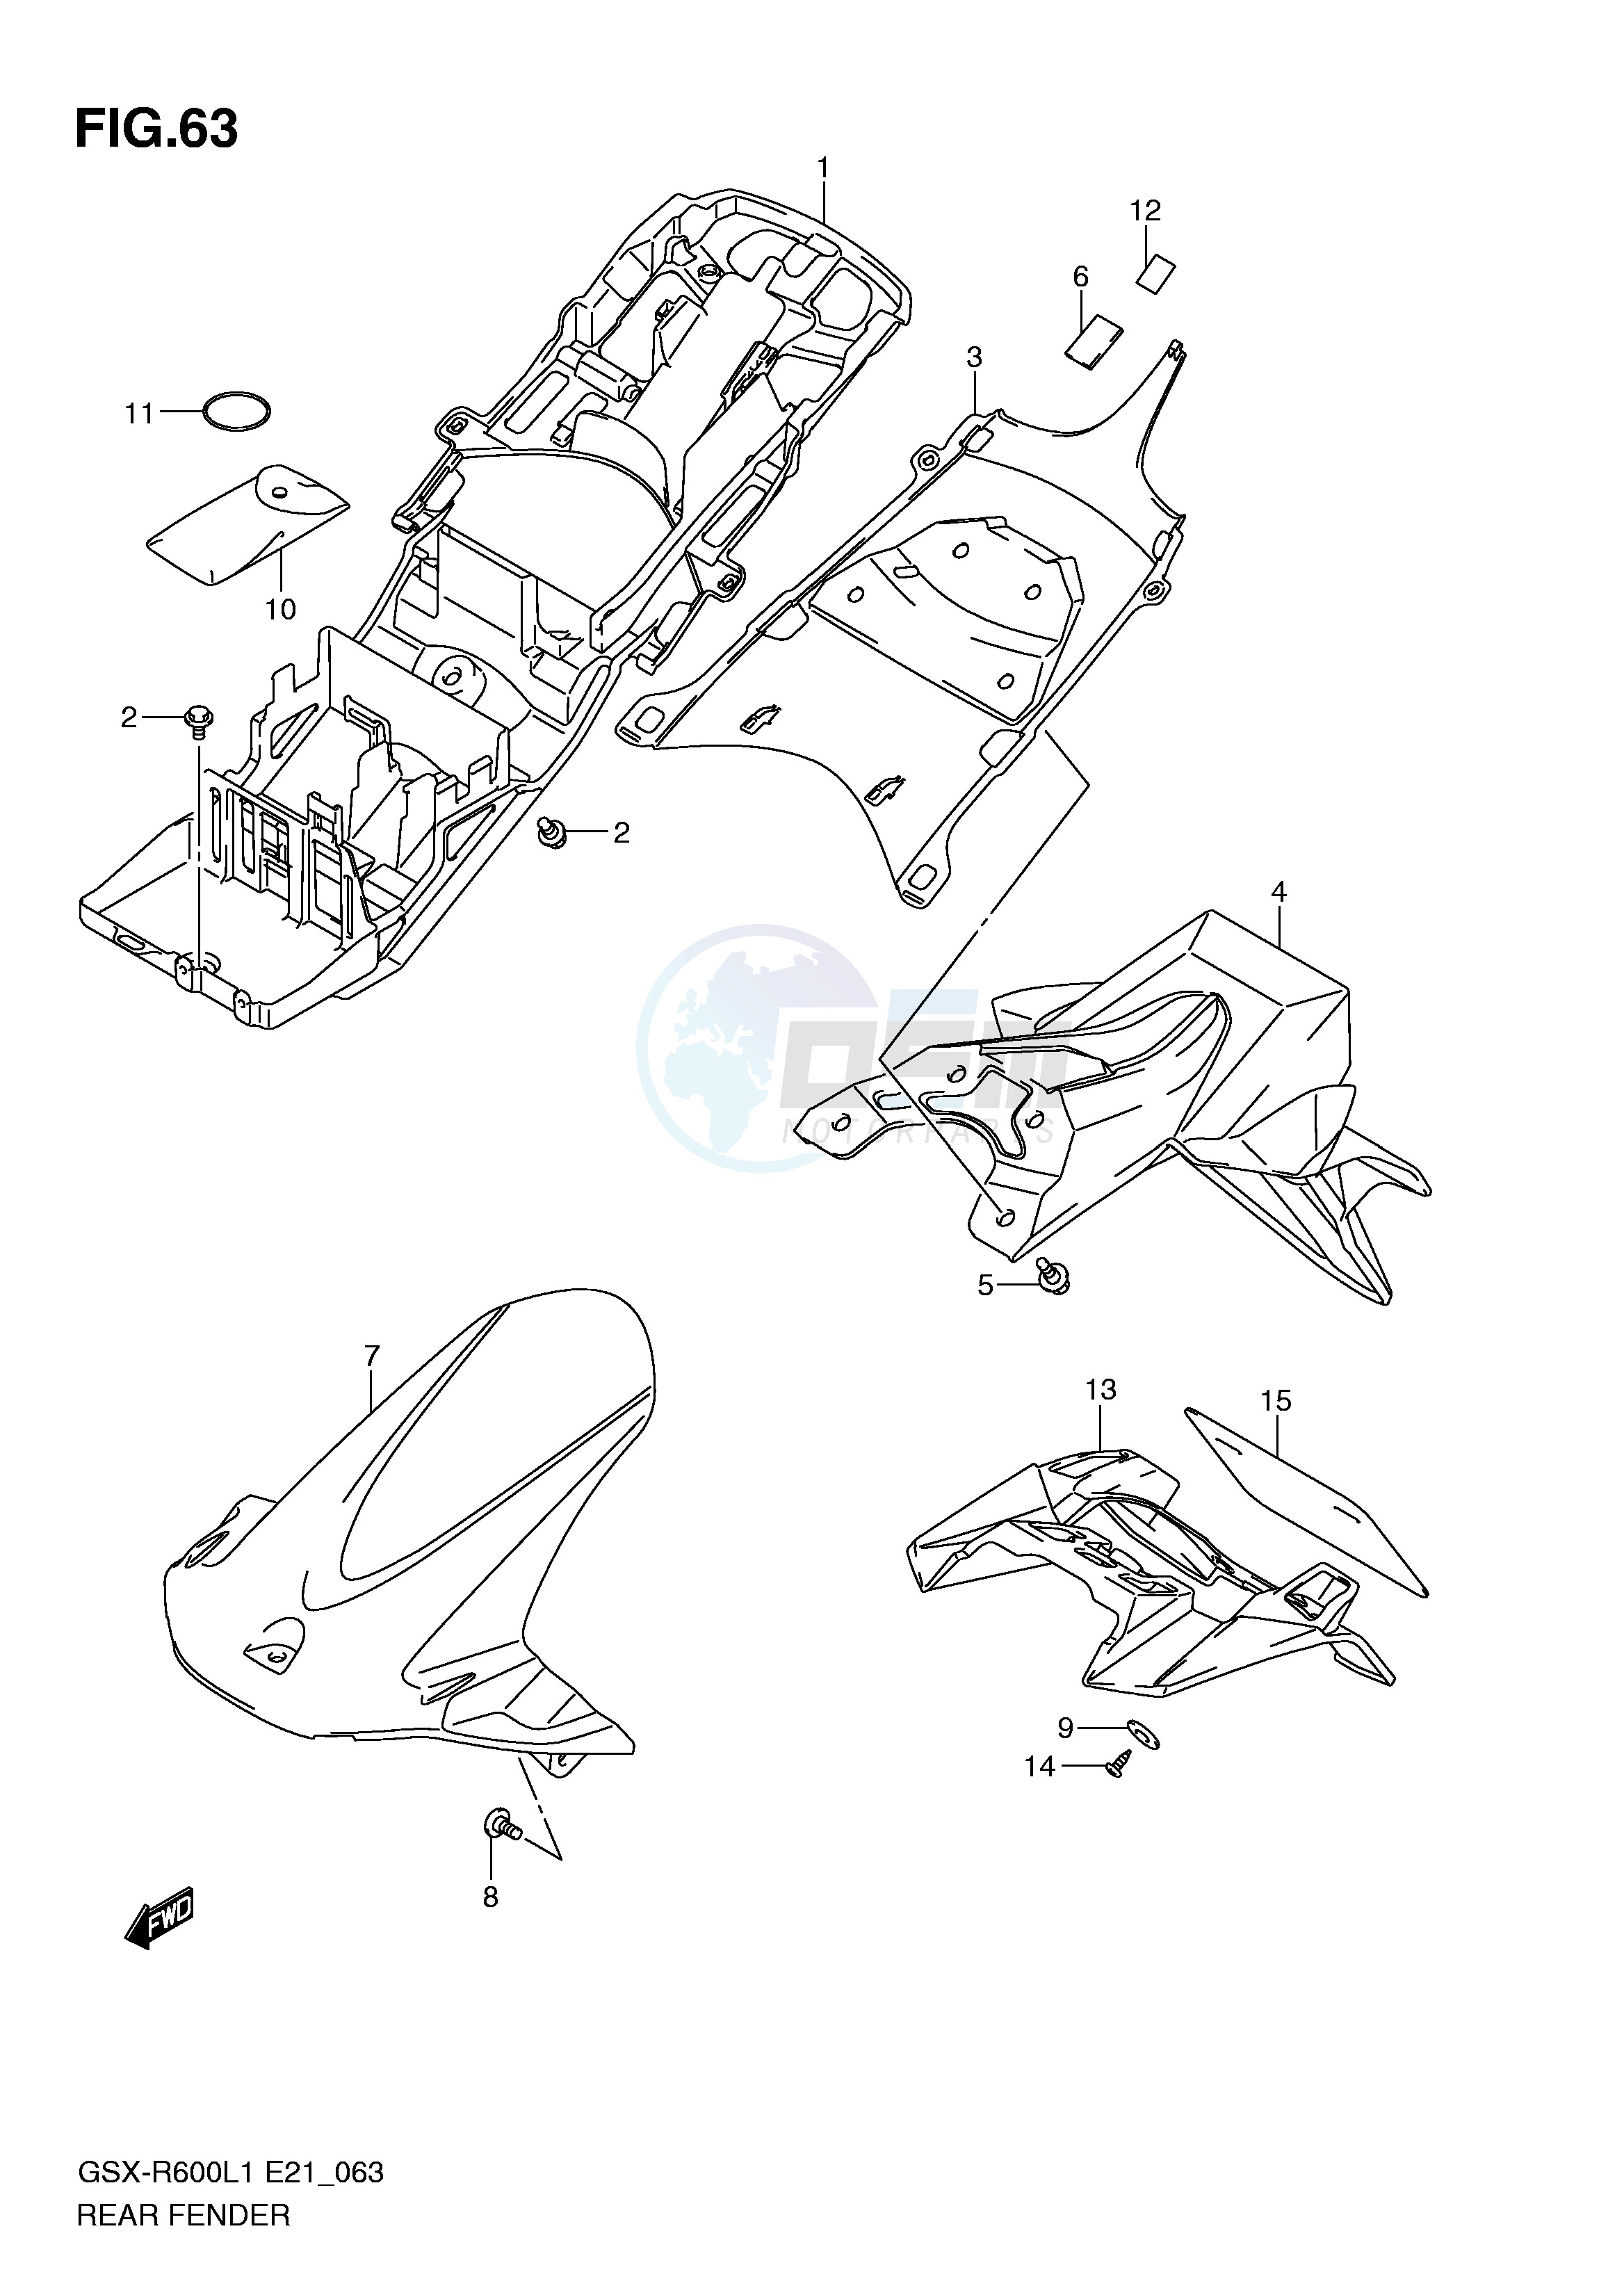 REAR FENDER (GSX-R600L1 E24) blueprint